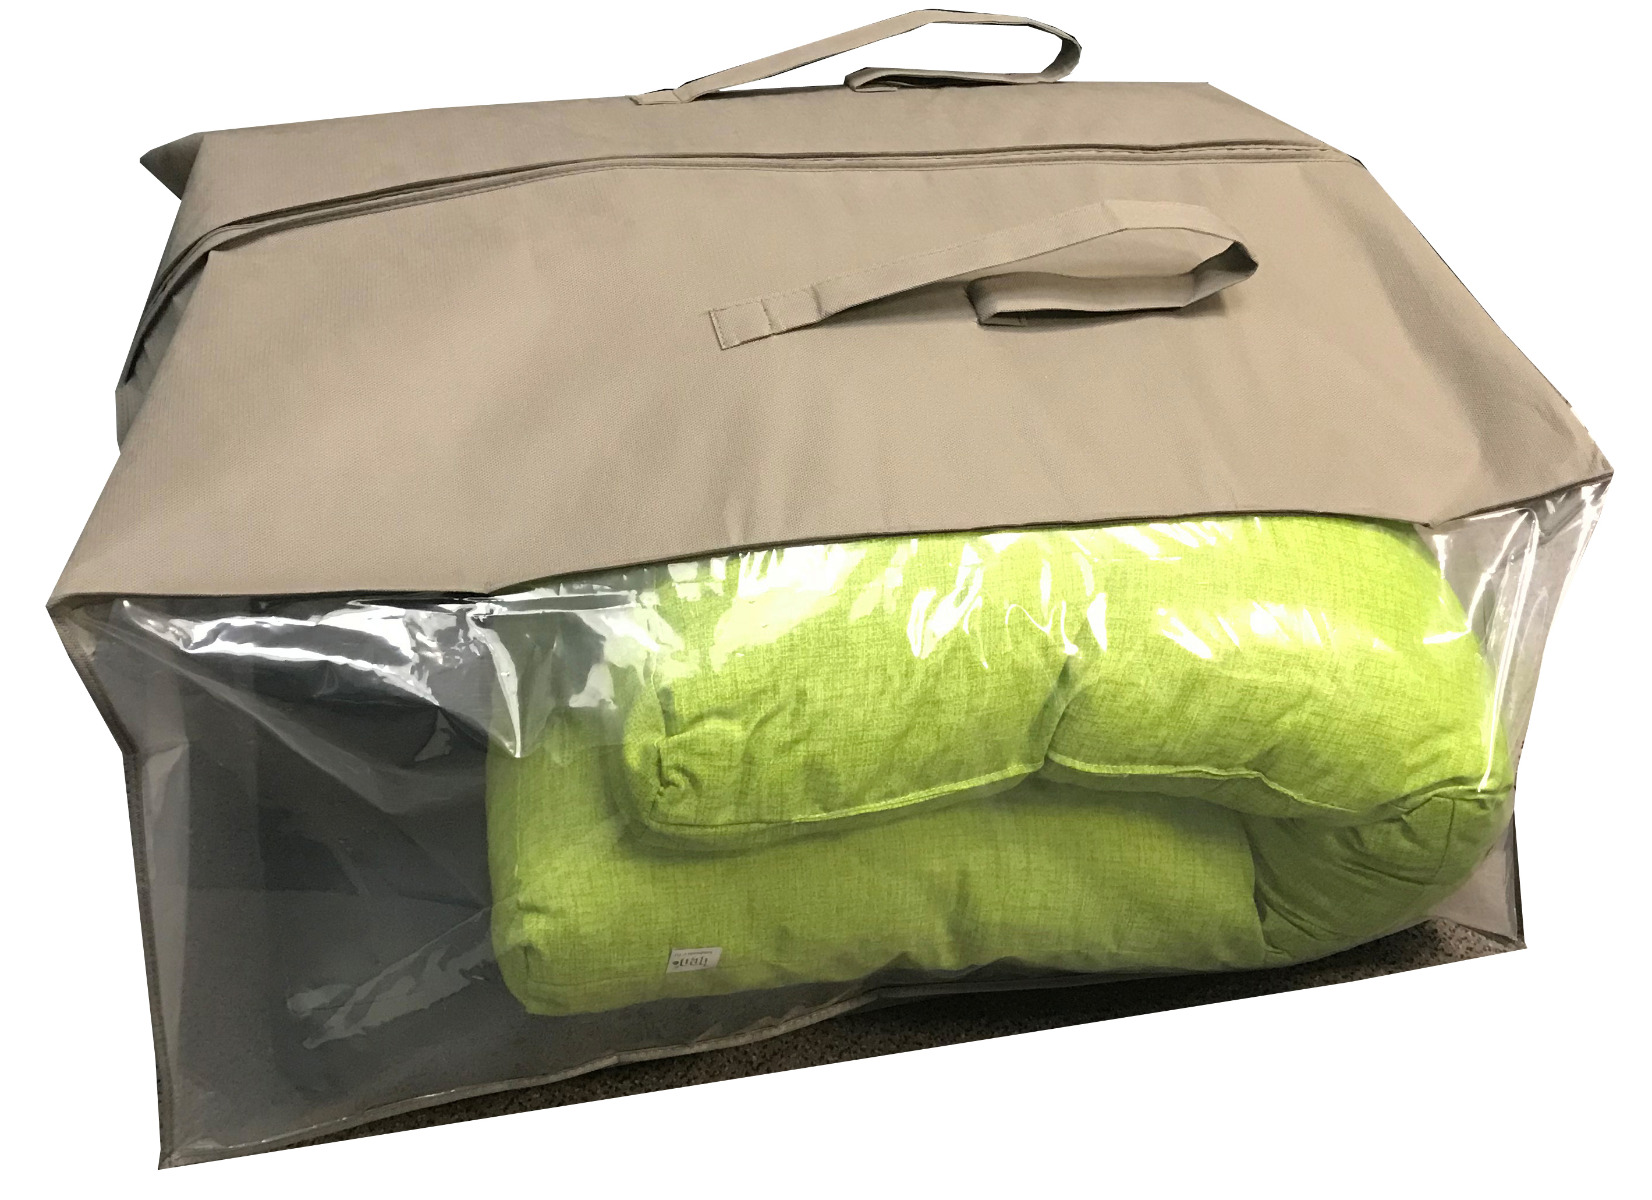 acamp® cappa promo
Tragetasche für Palettenkissen-Set
carrying bag for pallets cushion sets